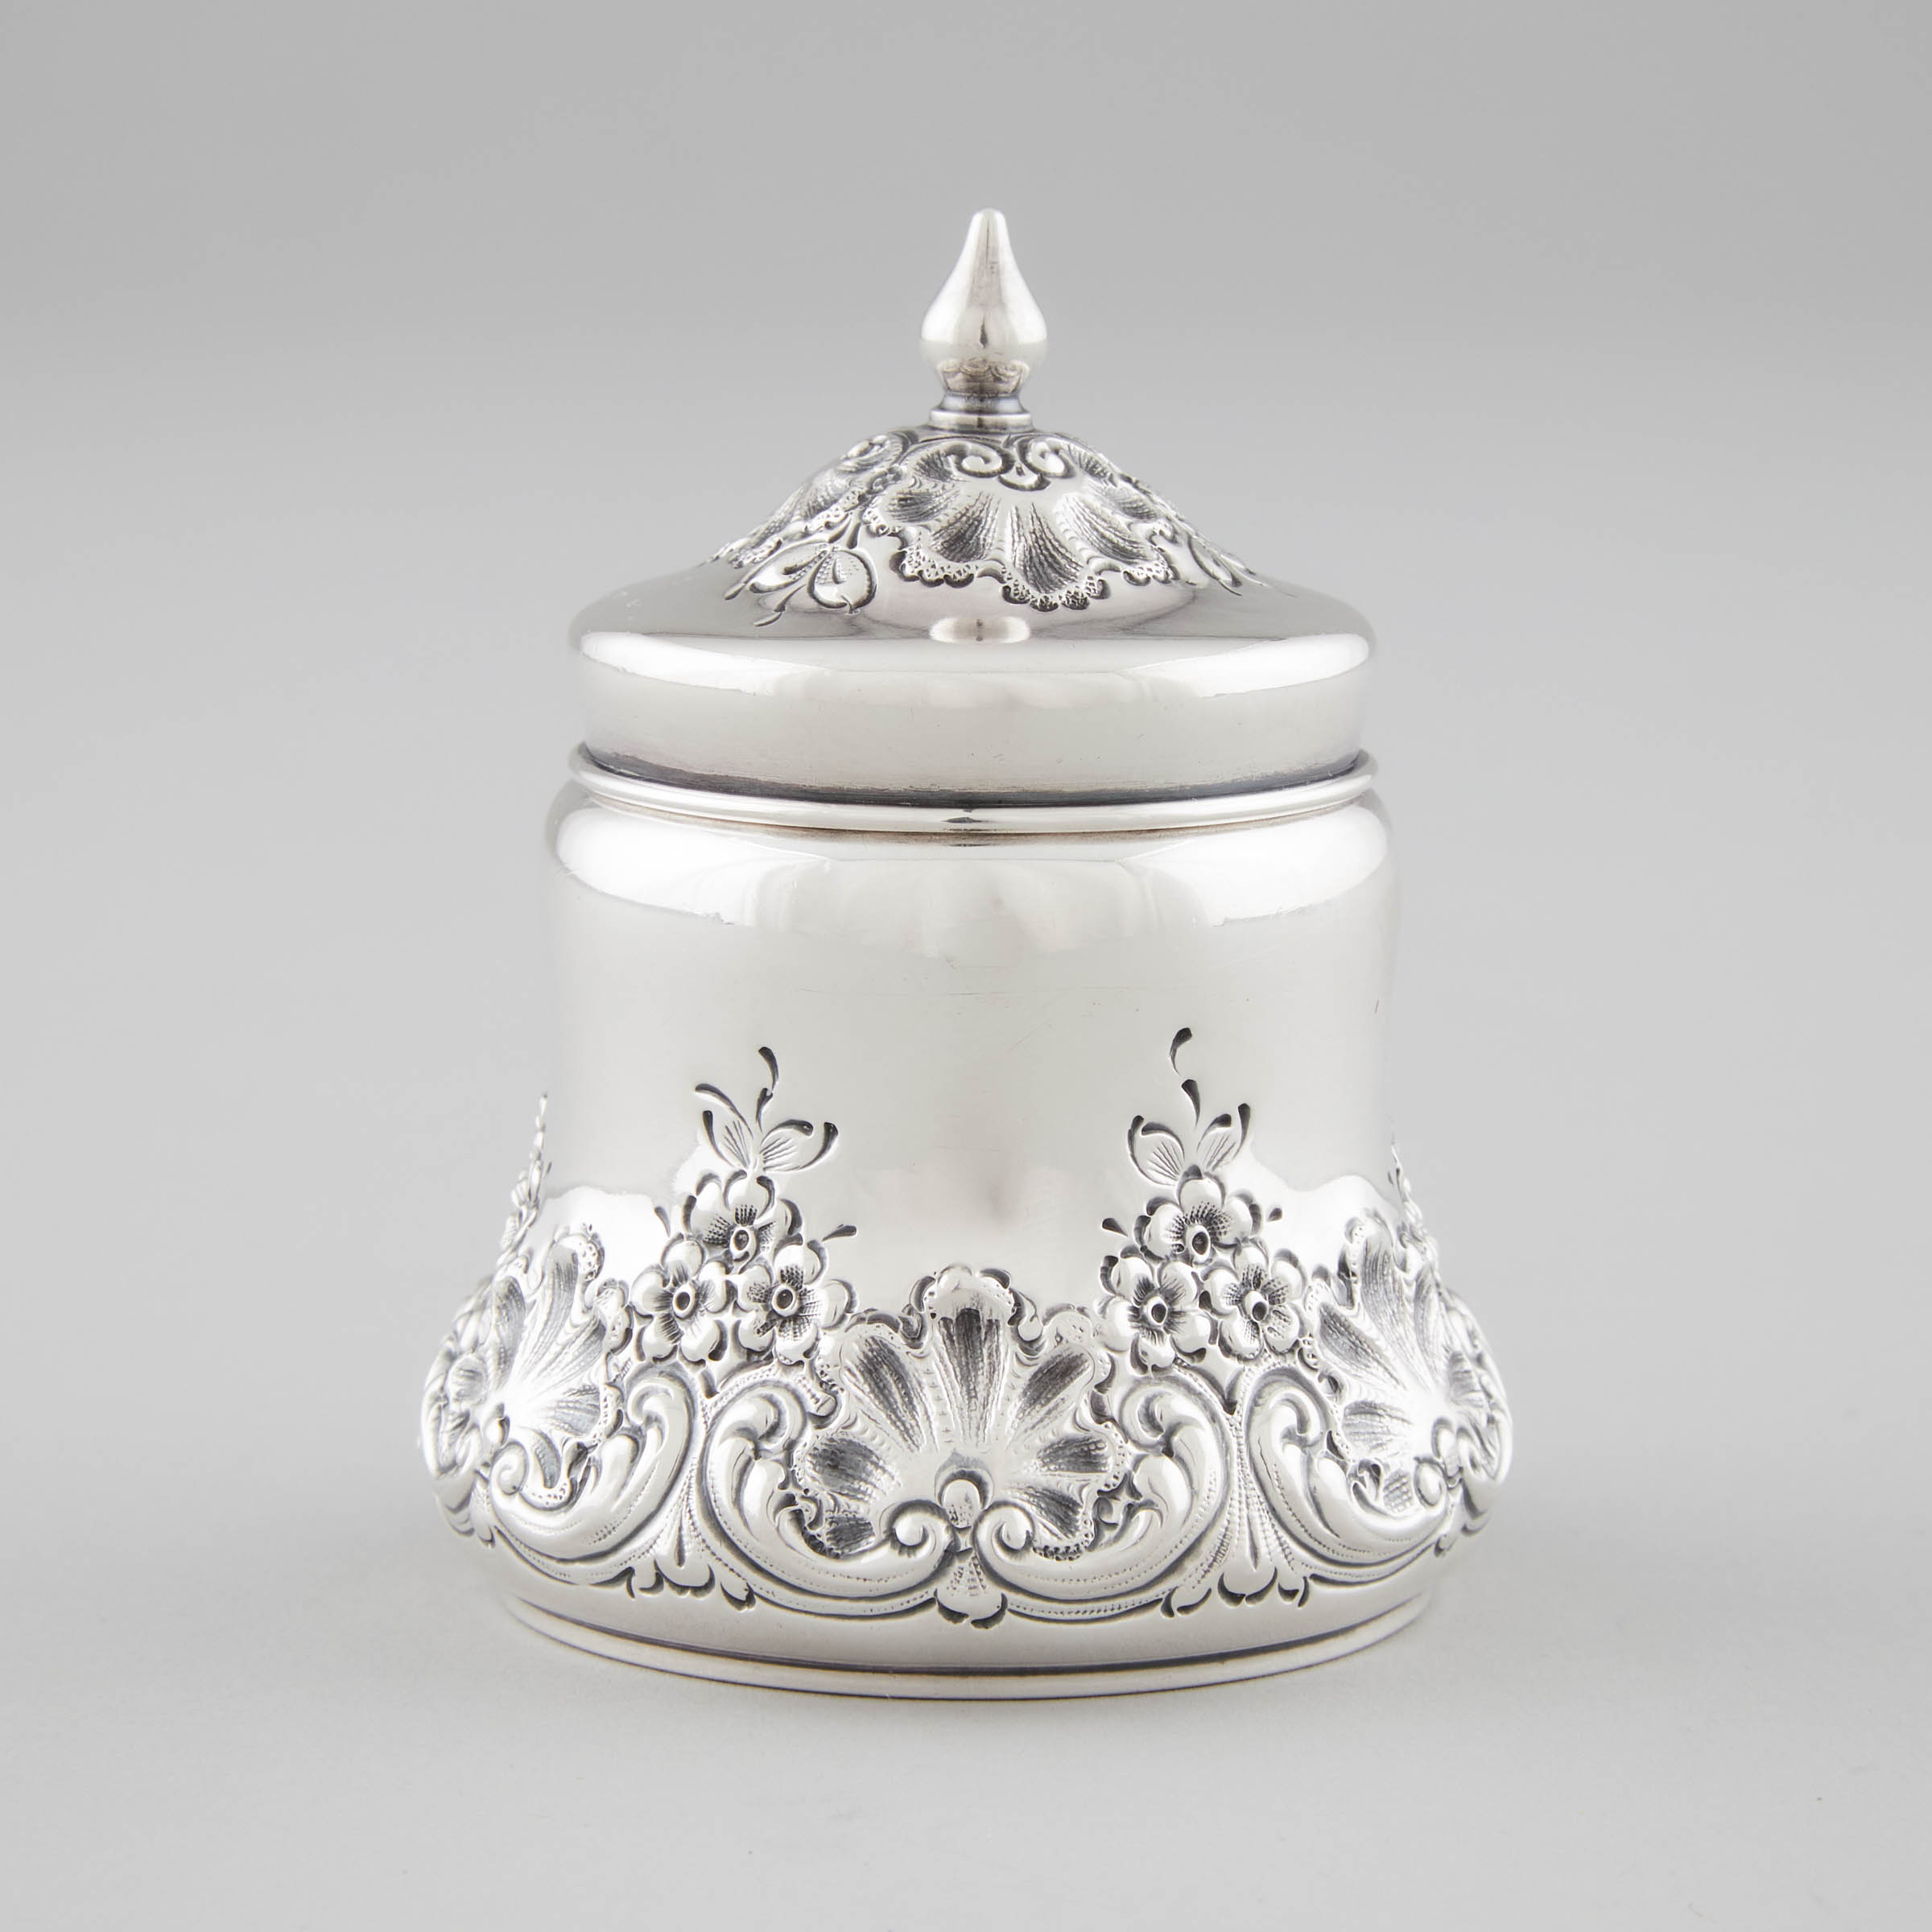 American Silver Small Covered Jar, Theodore B. Starr, New York, N.Y., c.1900